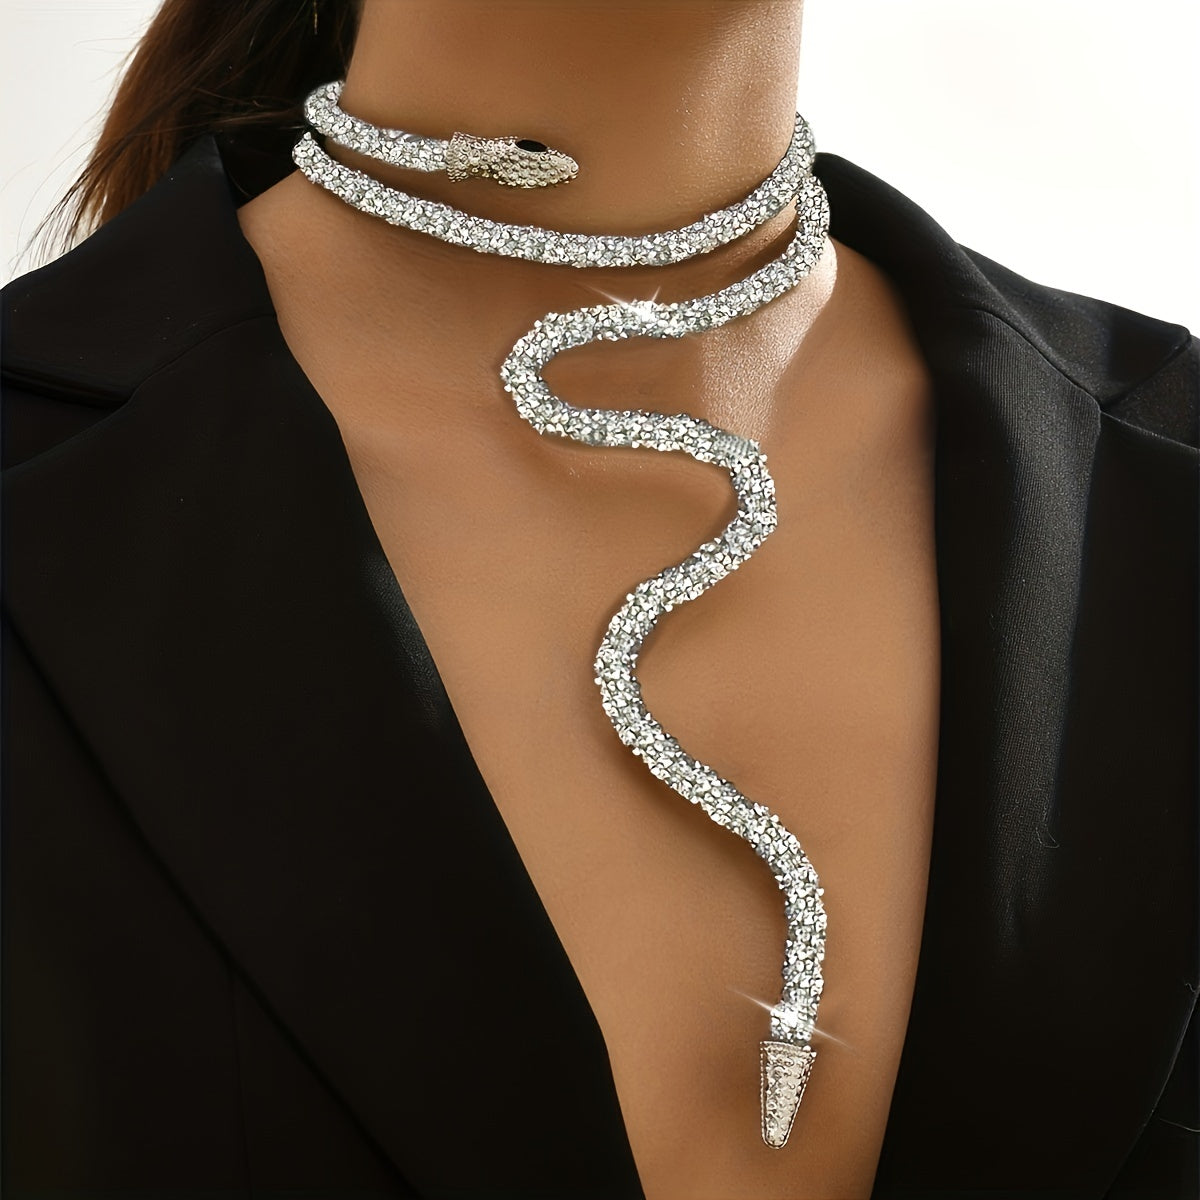 White Color Necklace Random Adjustable Simulation Snake Rhinestone Collar Necklace Punk Gothic Bling Bling Neck Jewelry Decor